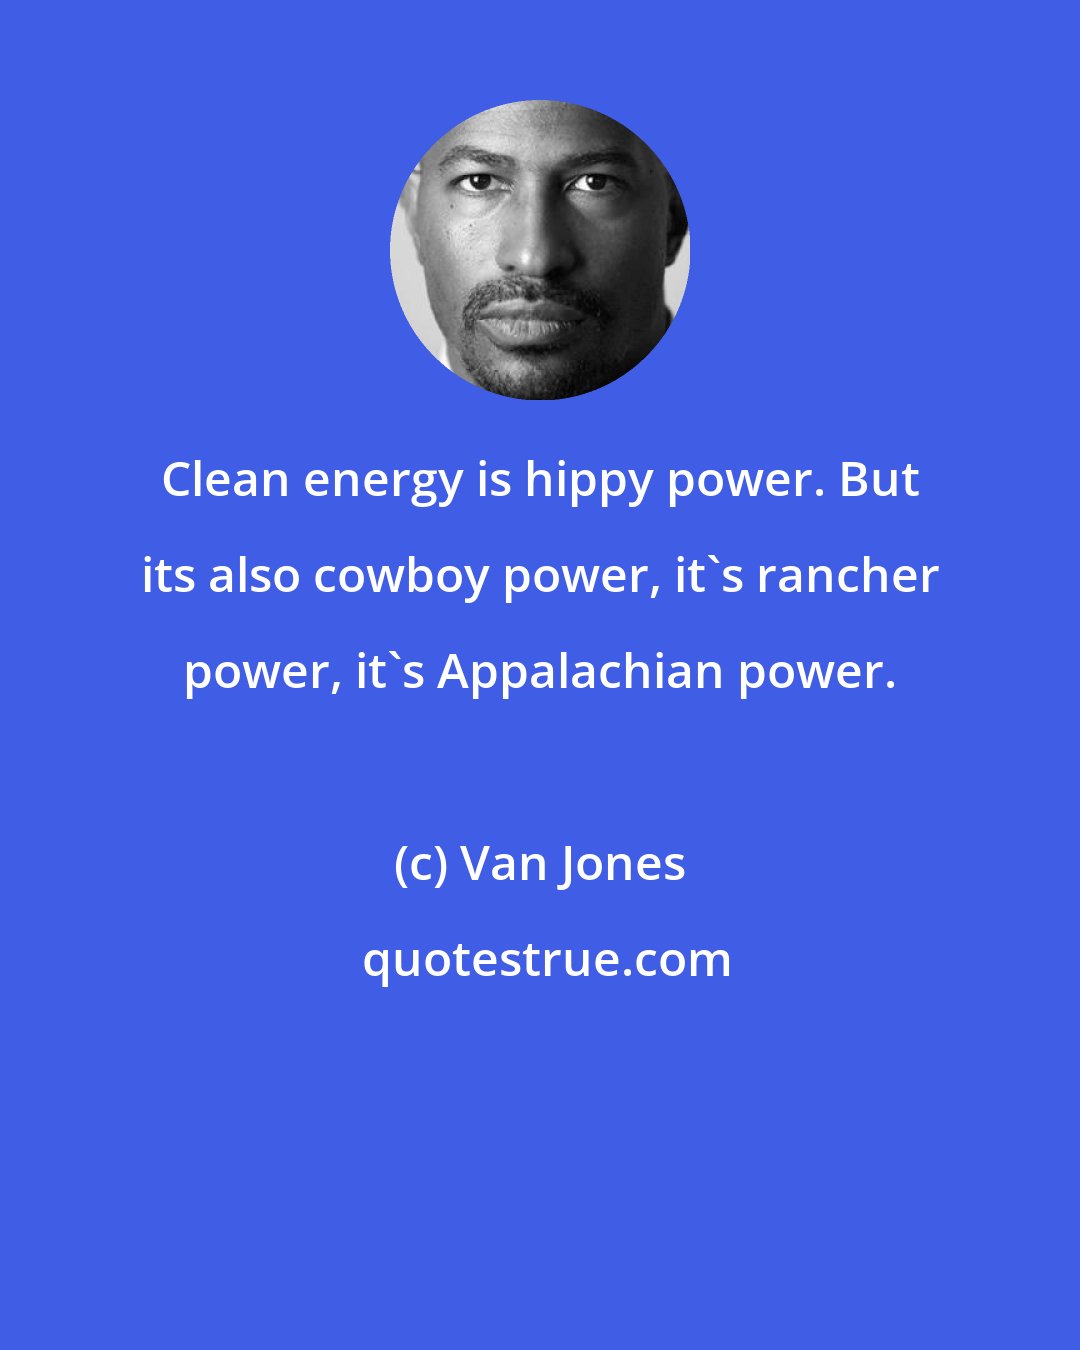 Van Jones: Clean energy is hippy power. But its also cowboy power, it's rancher power, it's Appalachian power.